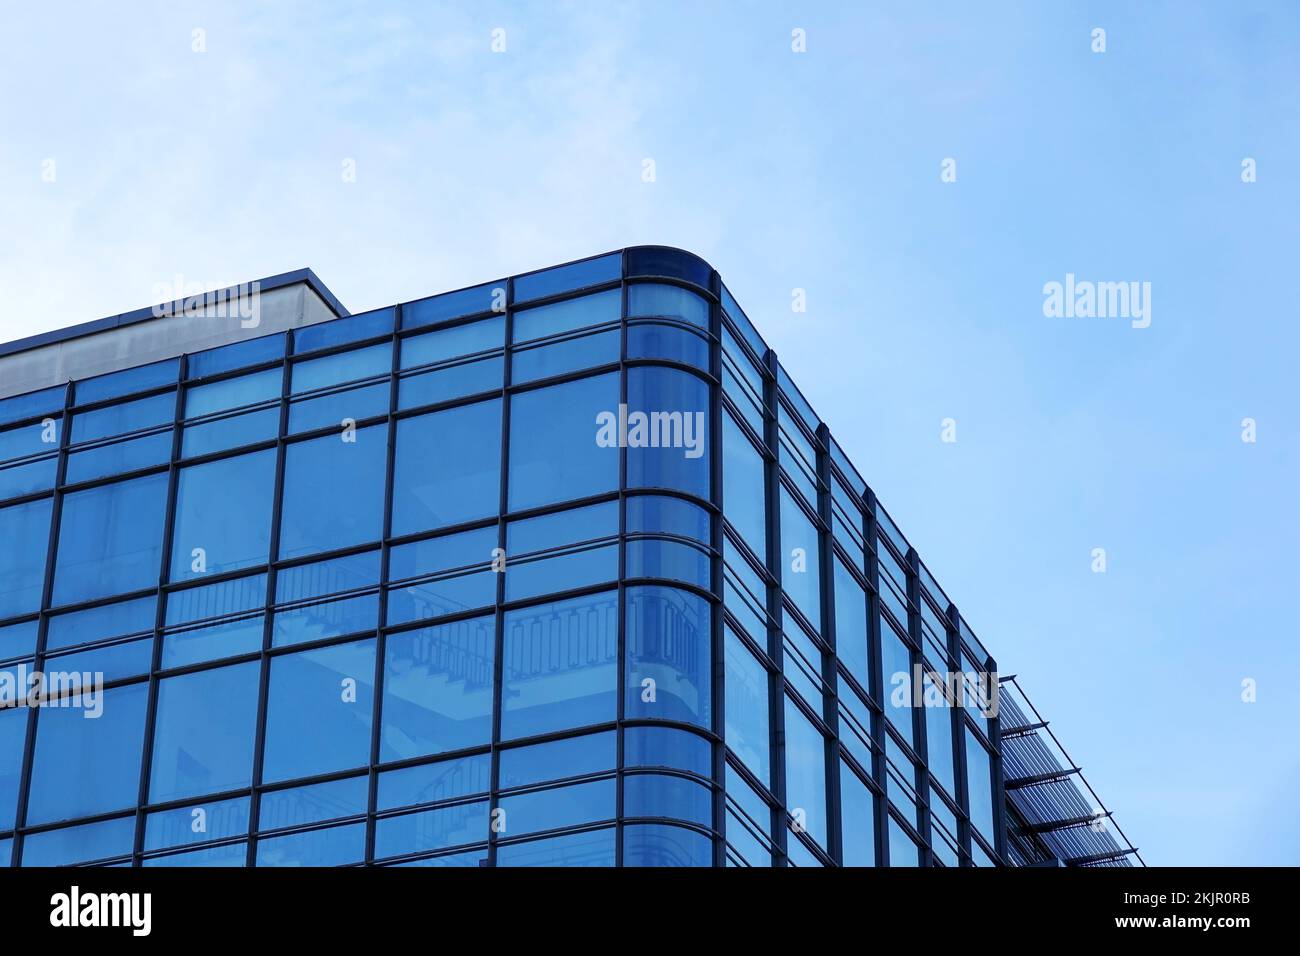 modern glass facade office building against blue sky Stock Photo